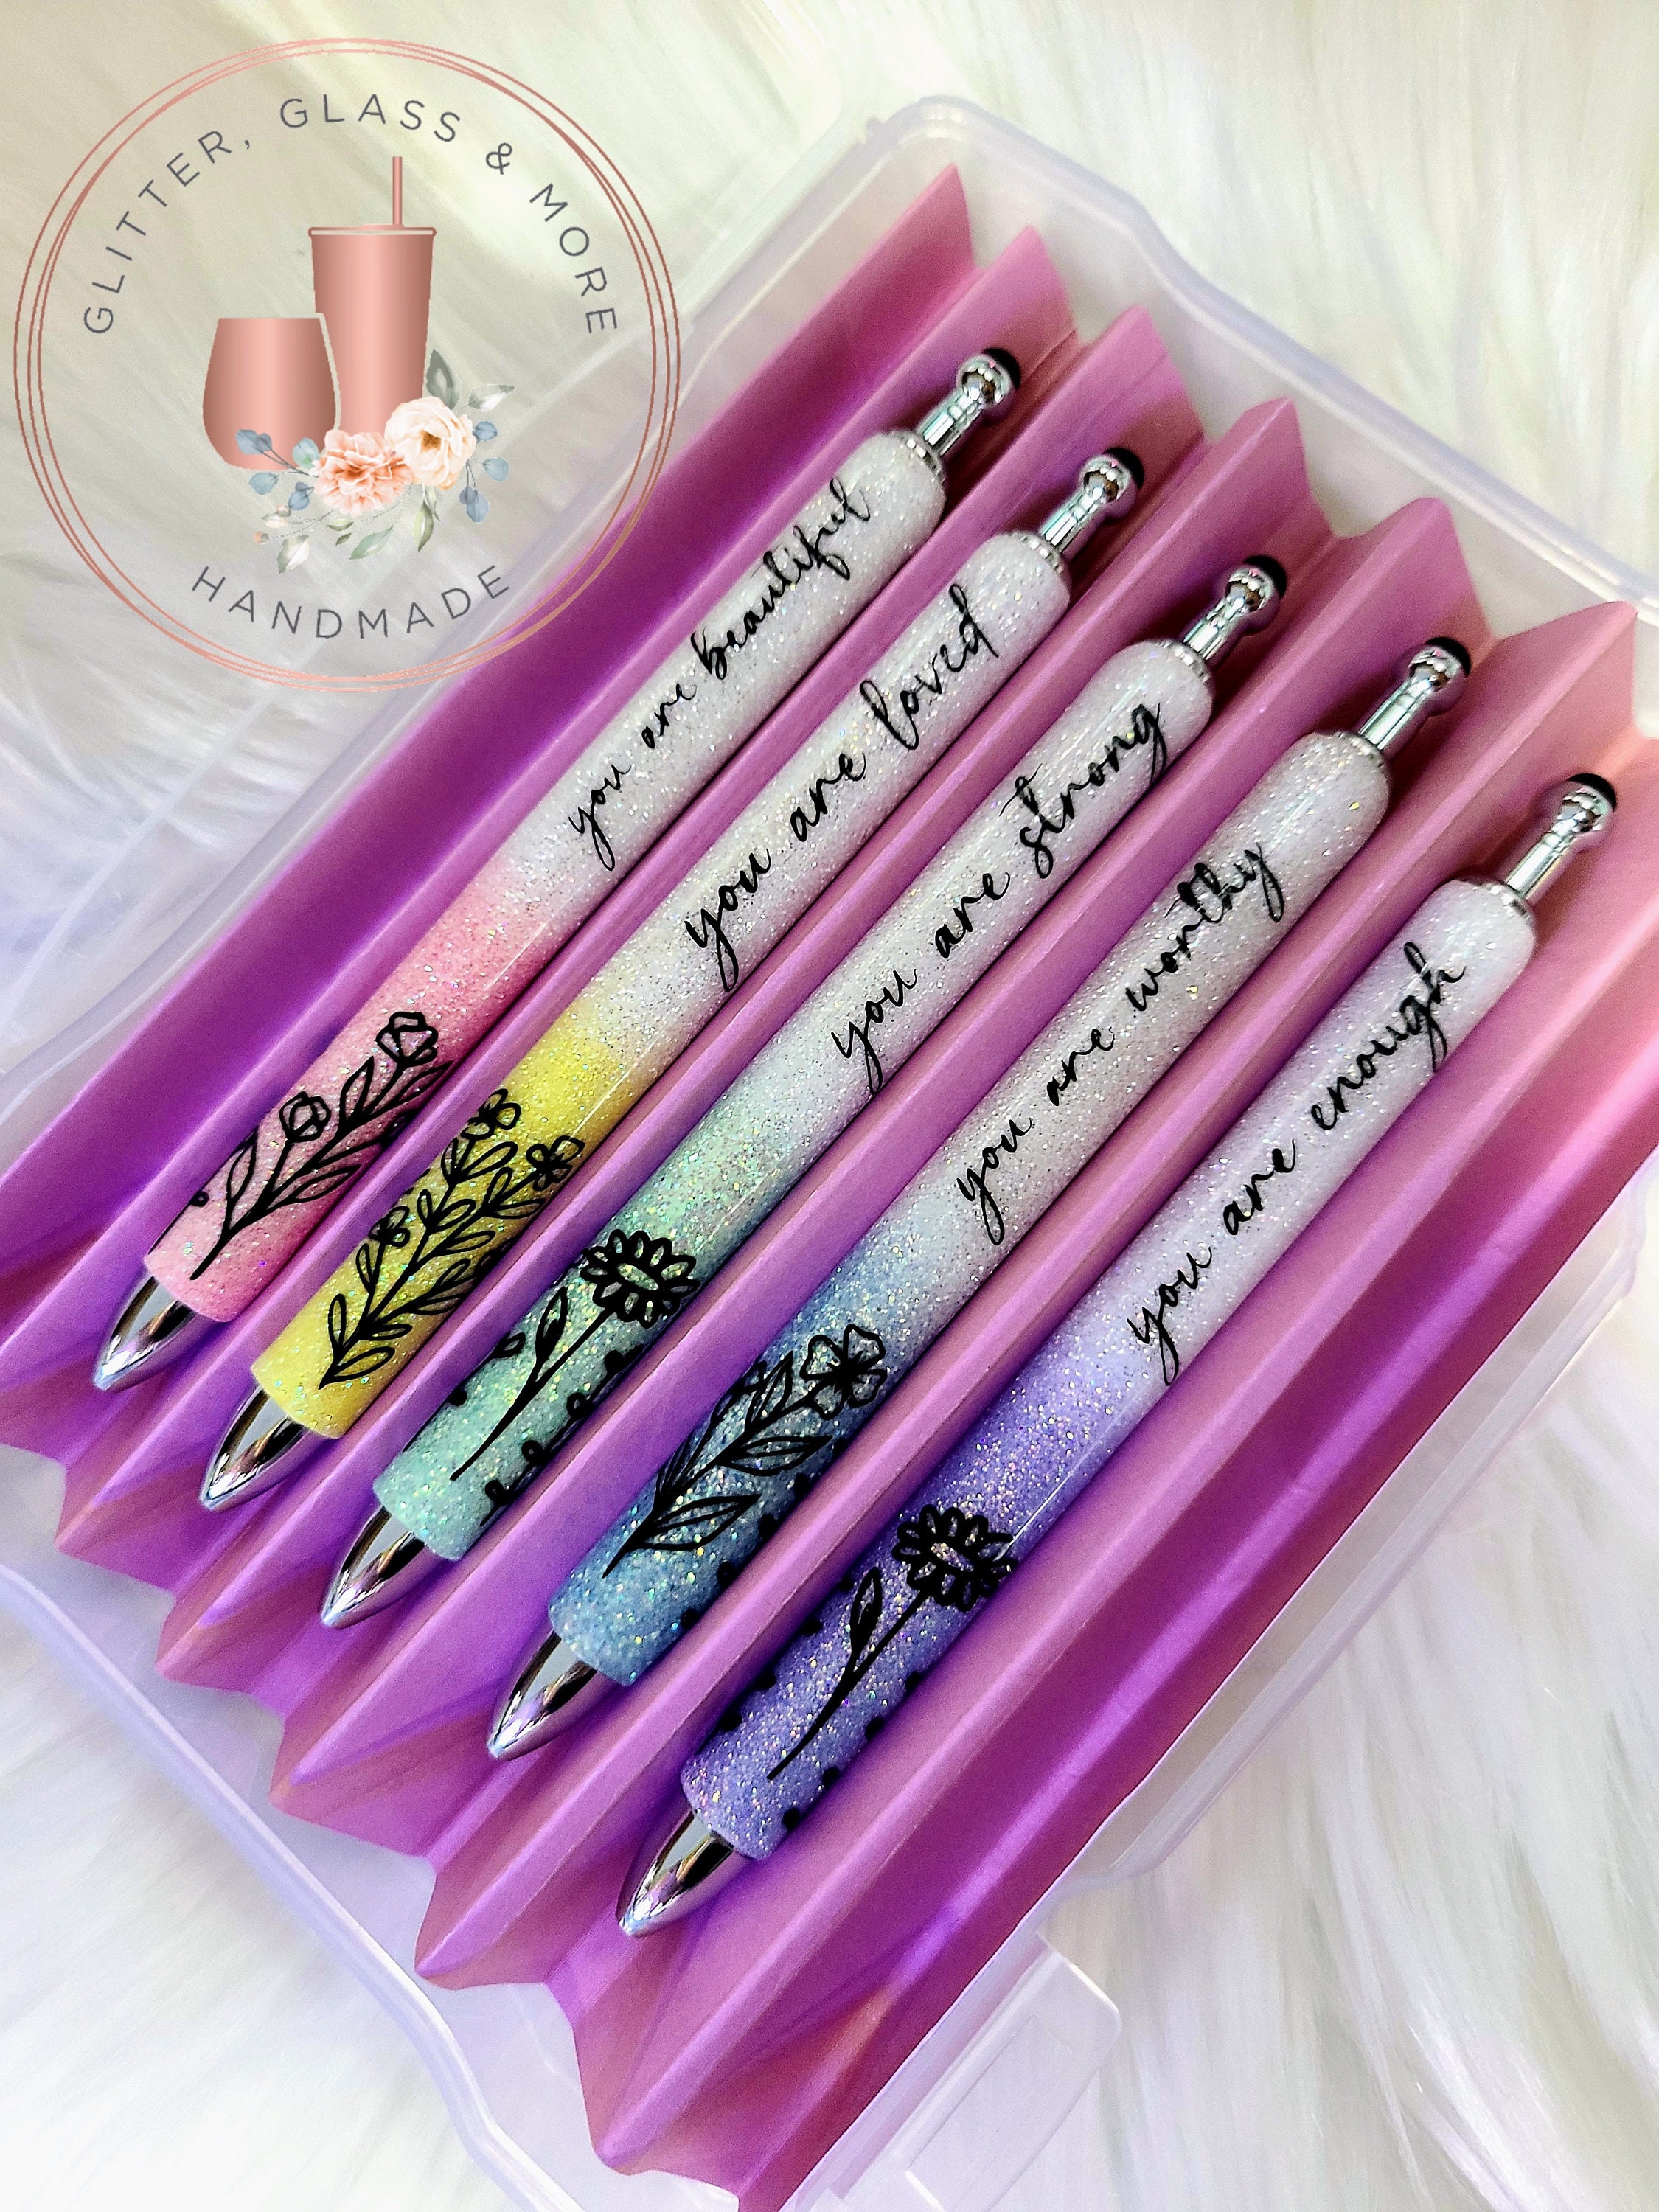 Hesroicy Glitter Shell Ballpoint Pens - Constant Ink Inspirational